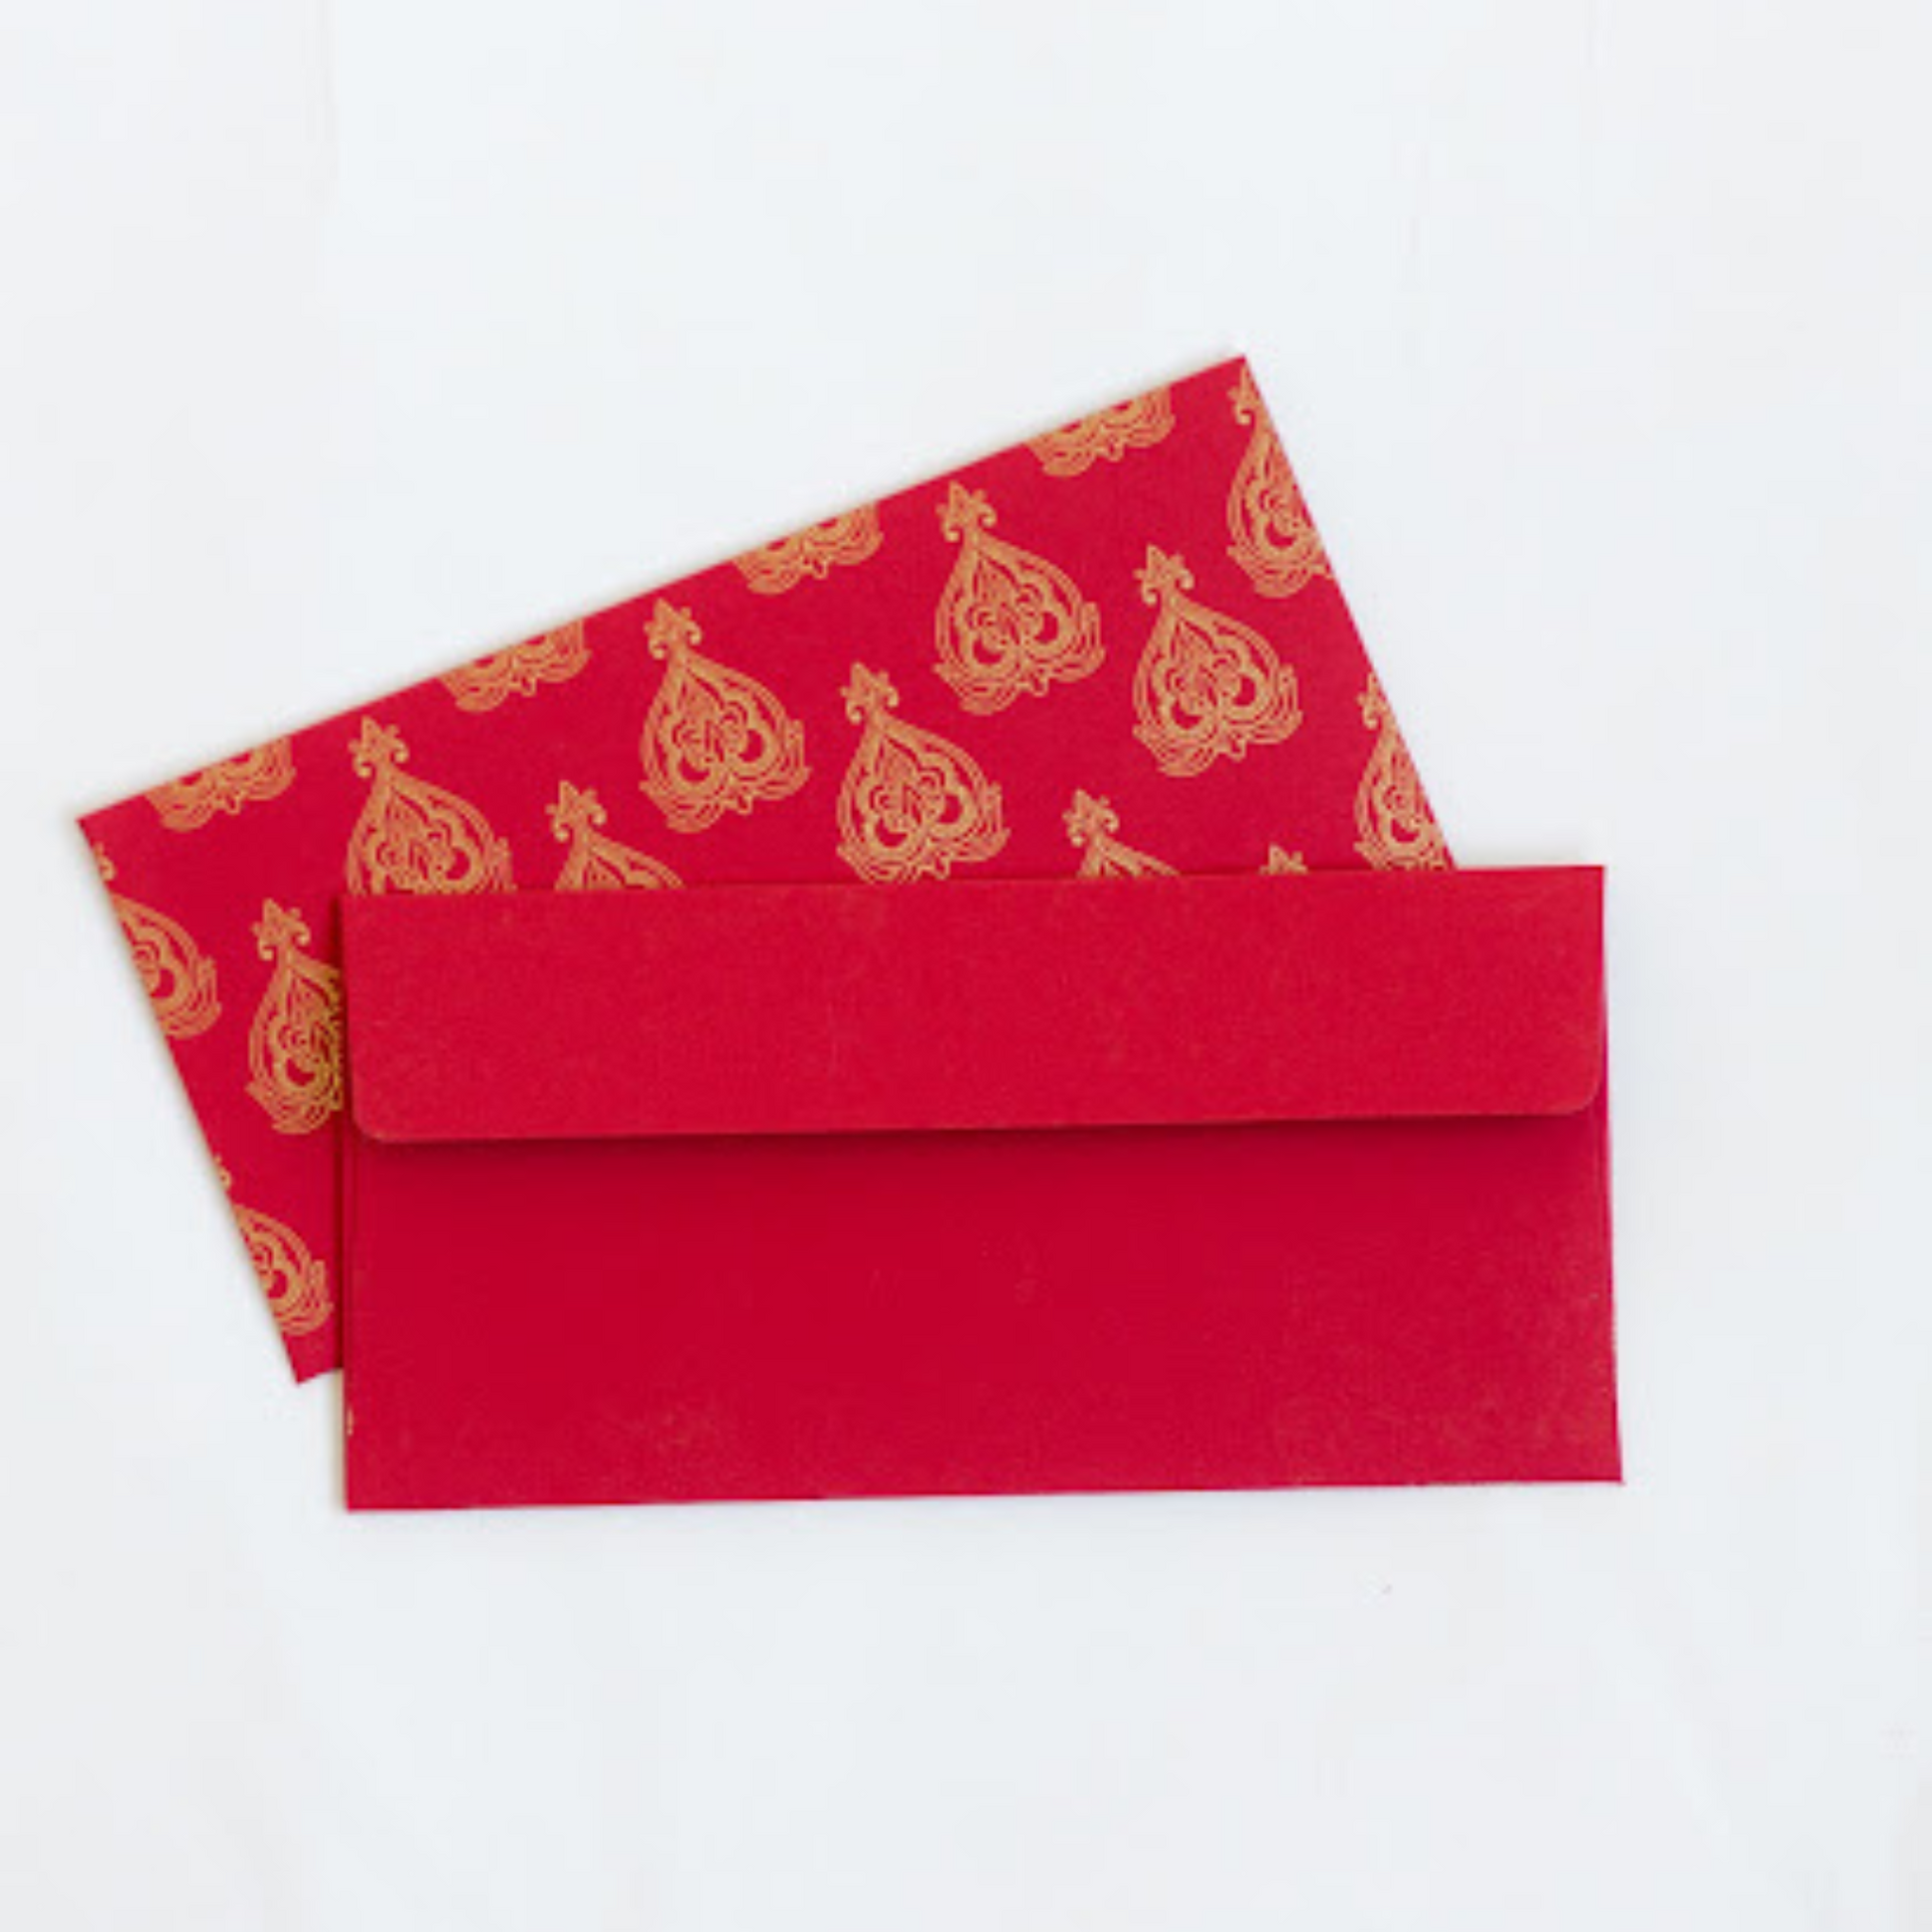 red & gold shugun money envelopes for indian wedding